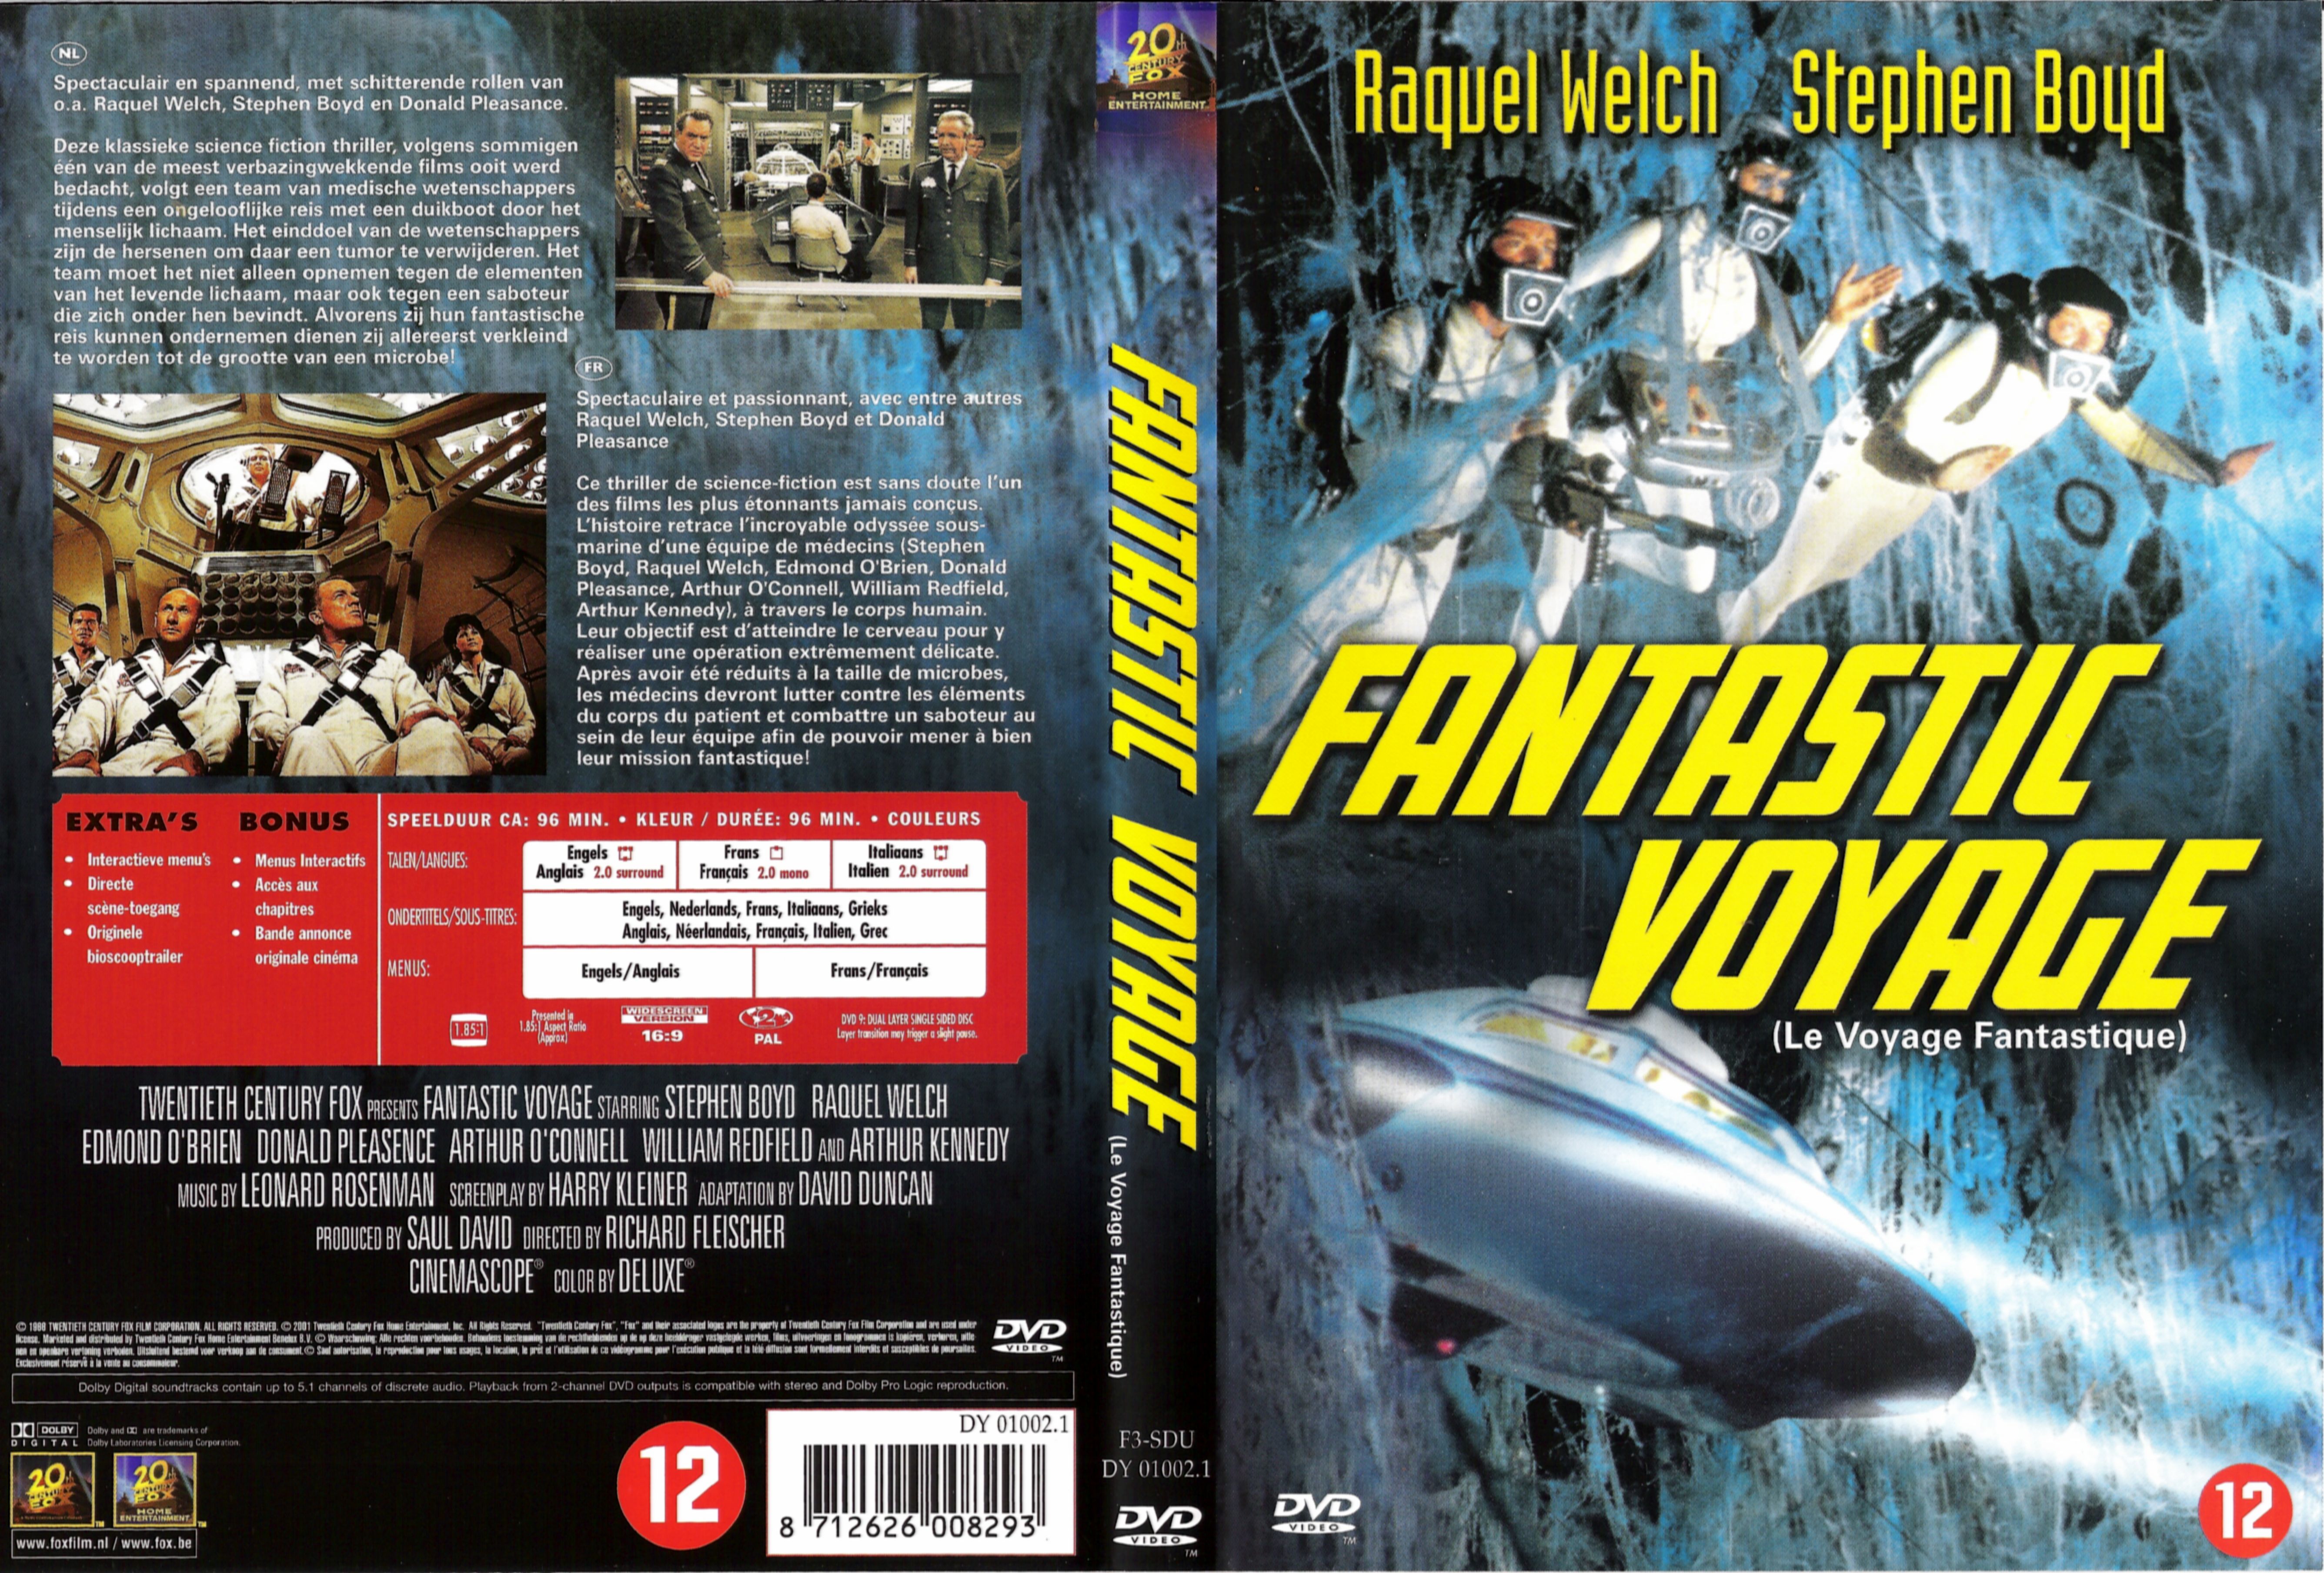 Jaquette DVD Le voyage fantastique v2